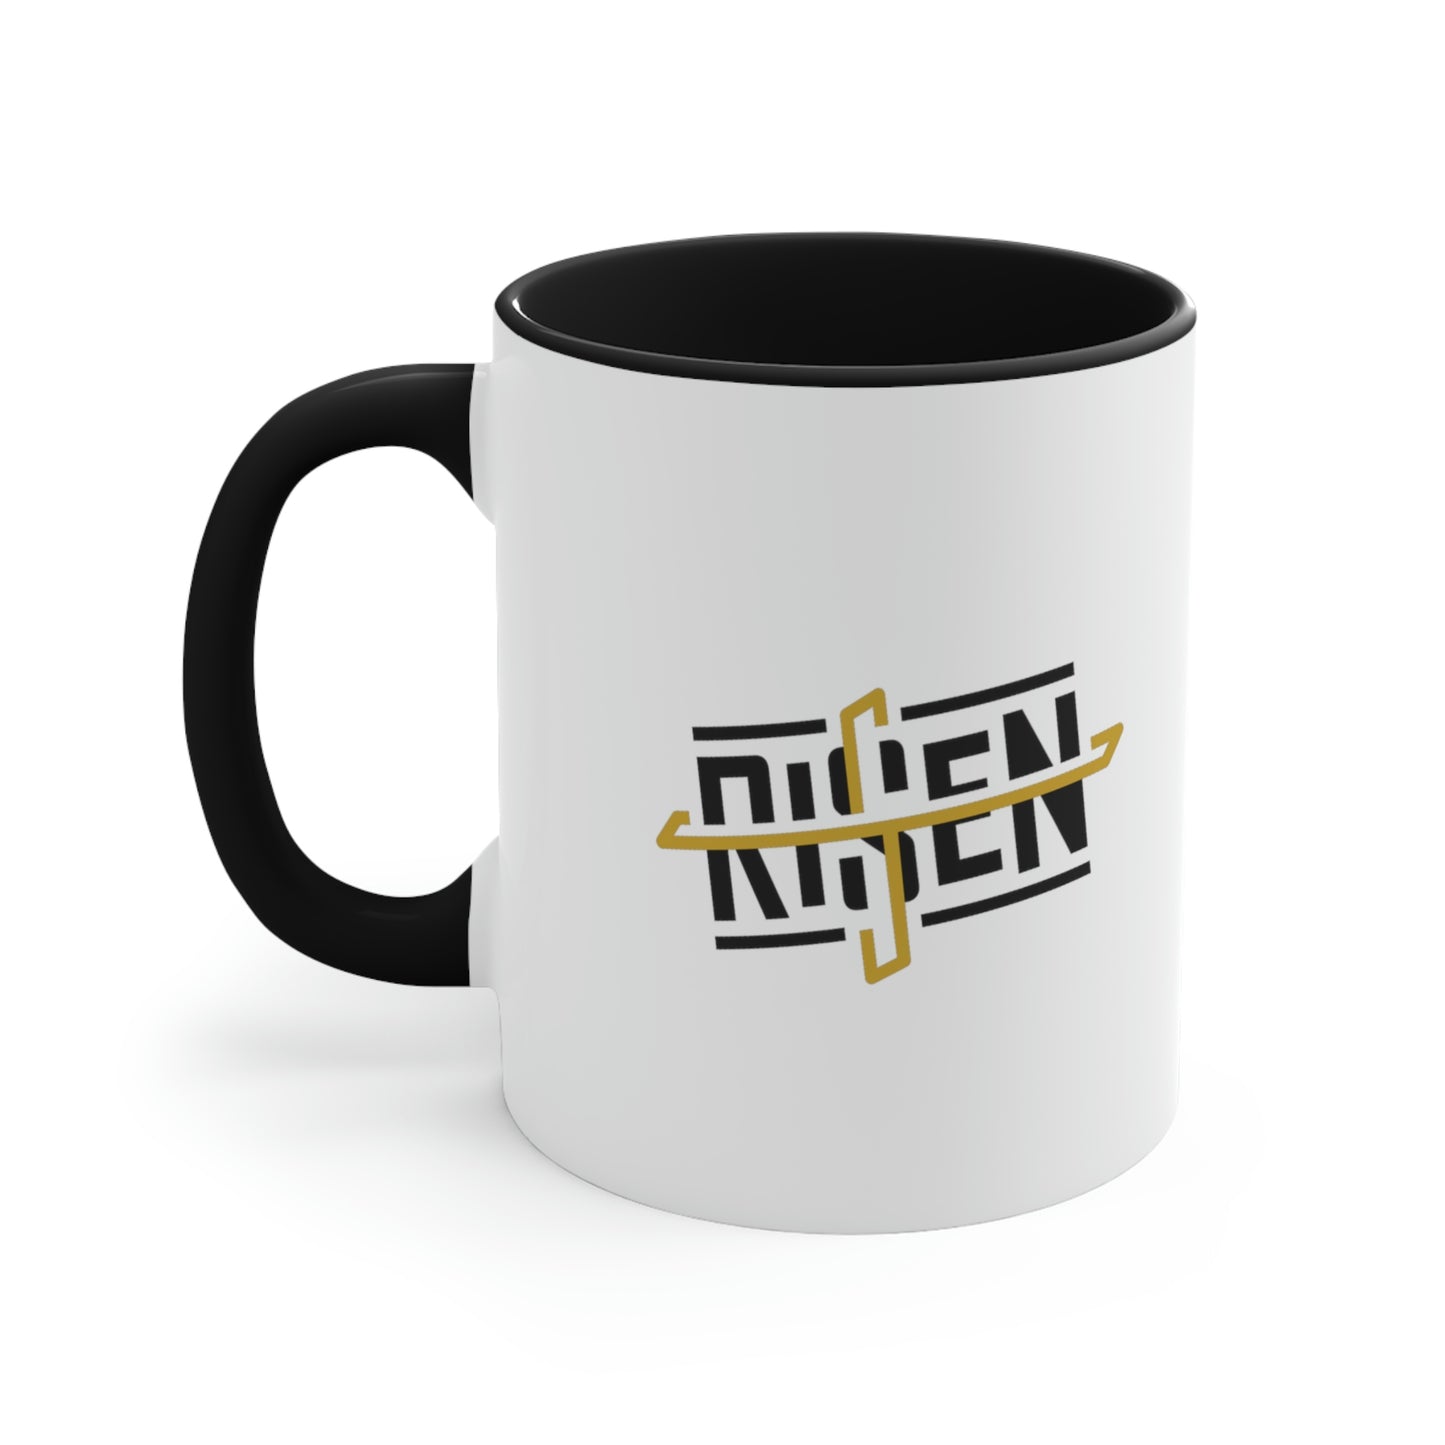 Risen - Accent Coffee Mug, 11oz